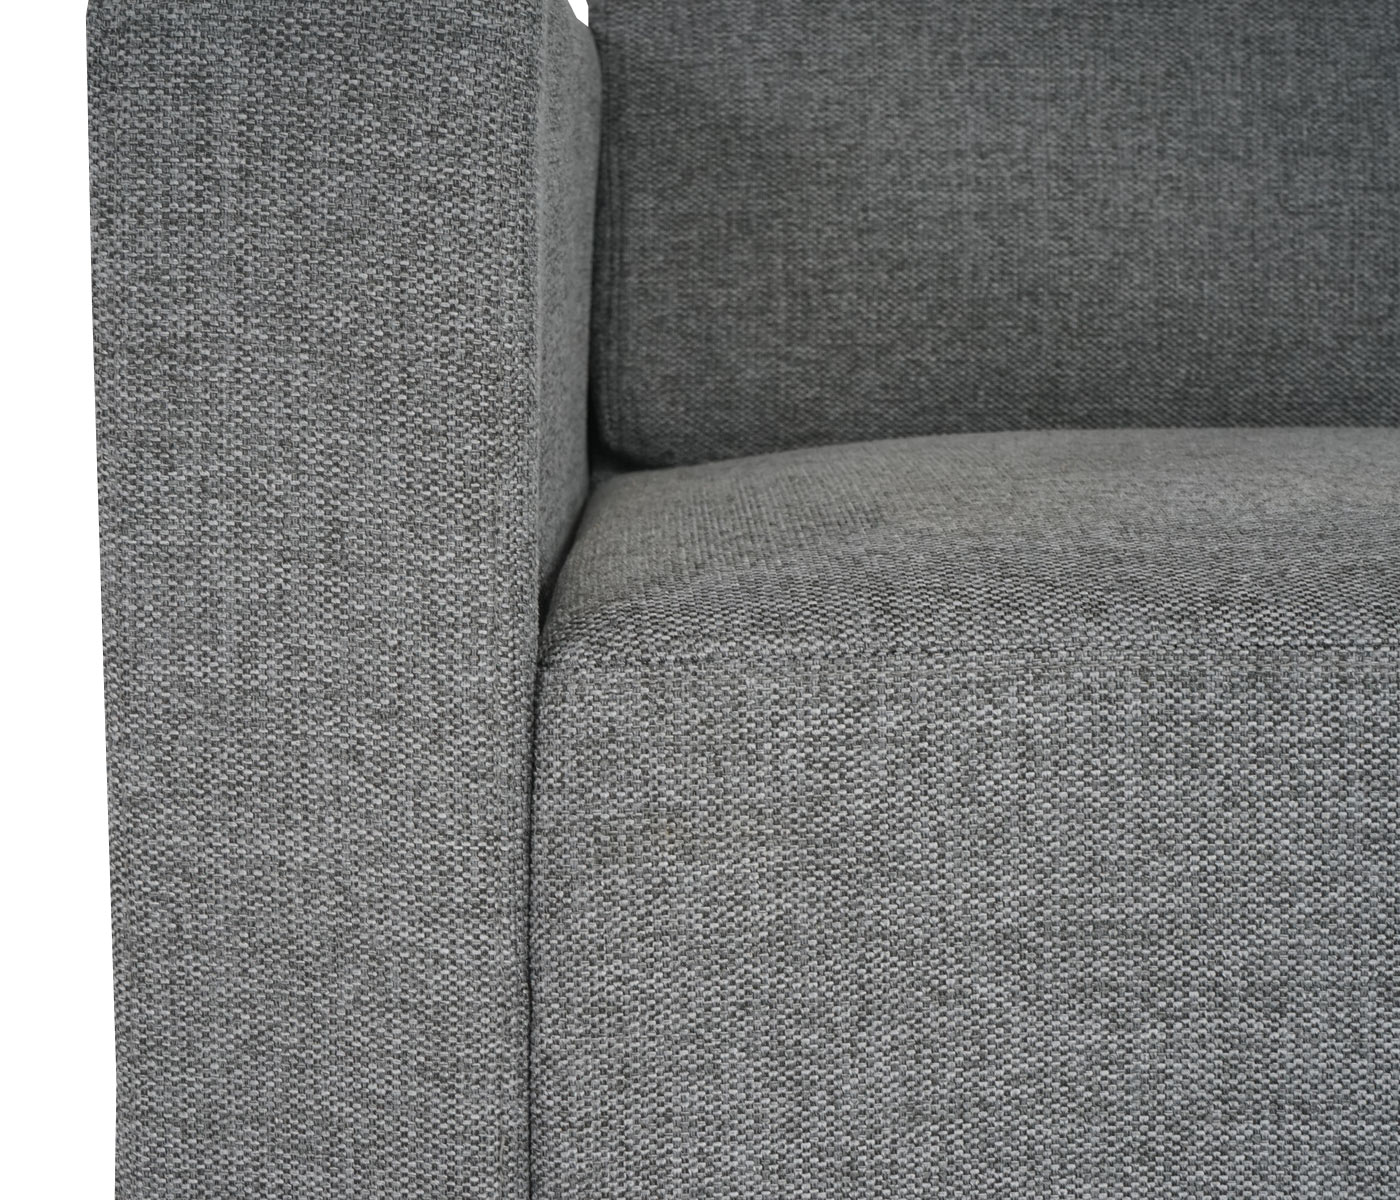 Modular 4-Sitzer Sofa Couch Lyon Detailbild Lehne